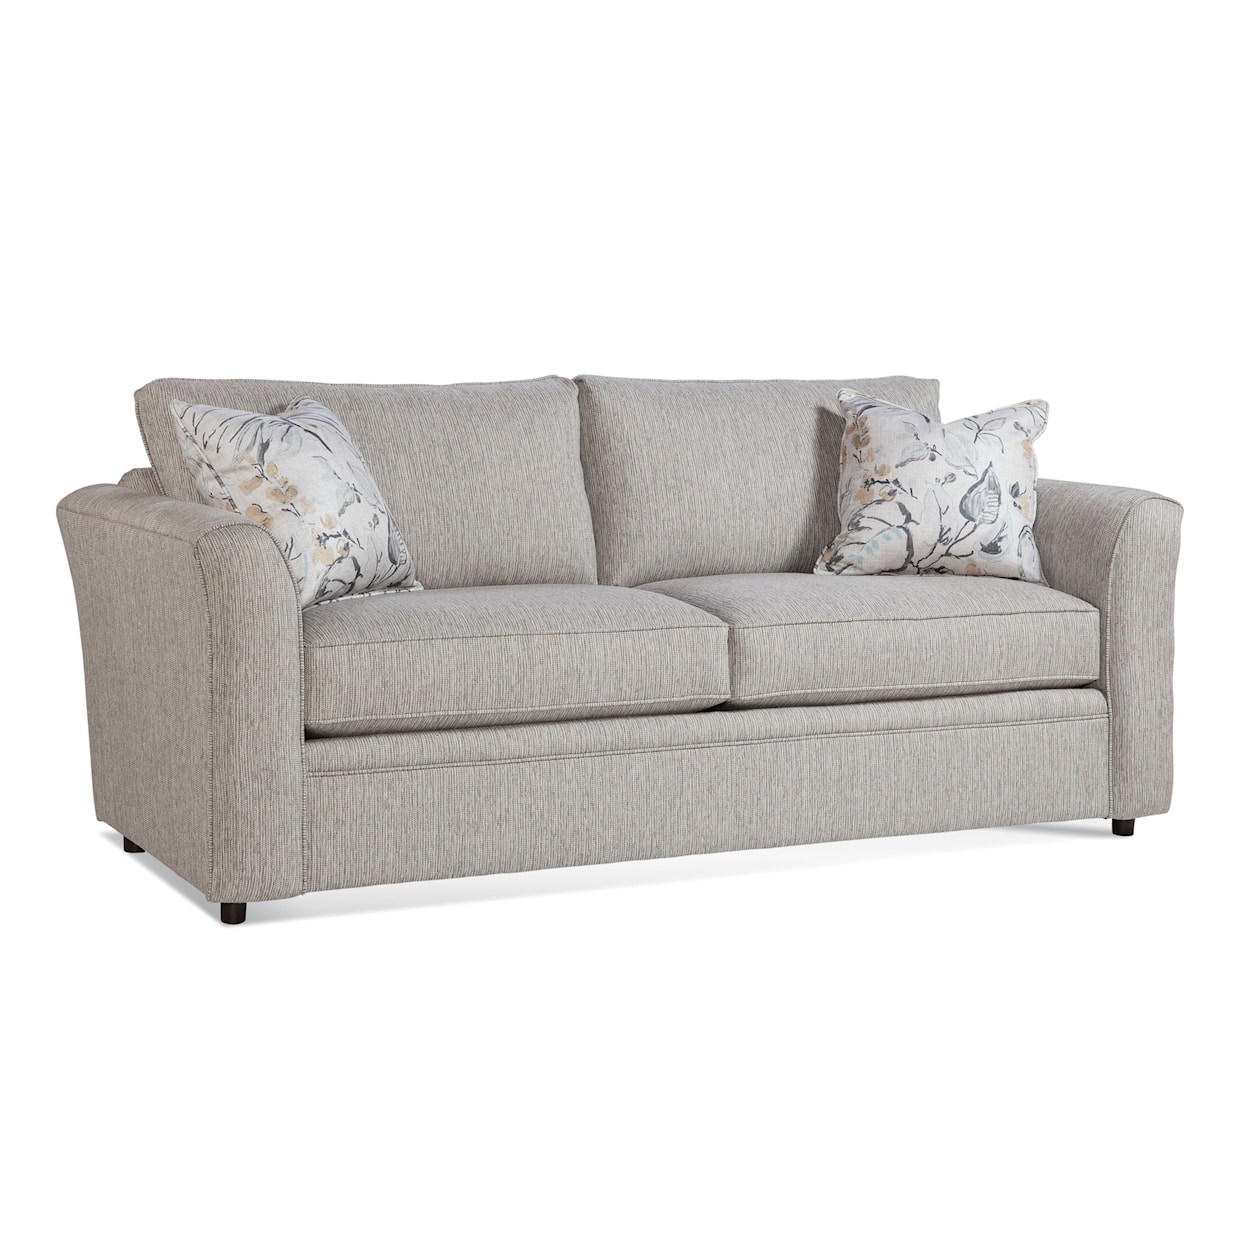 Braxton Culler Northfield 2 Cushion Upholstered Sofa